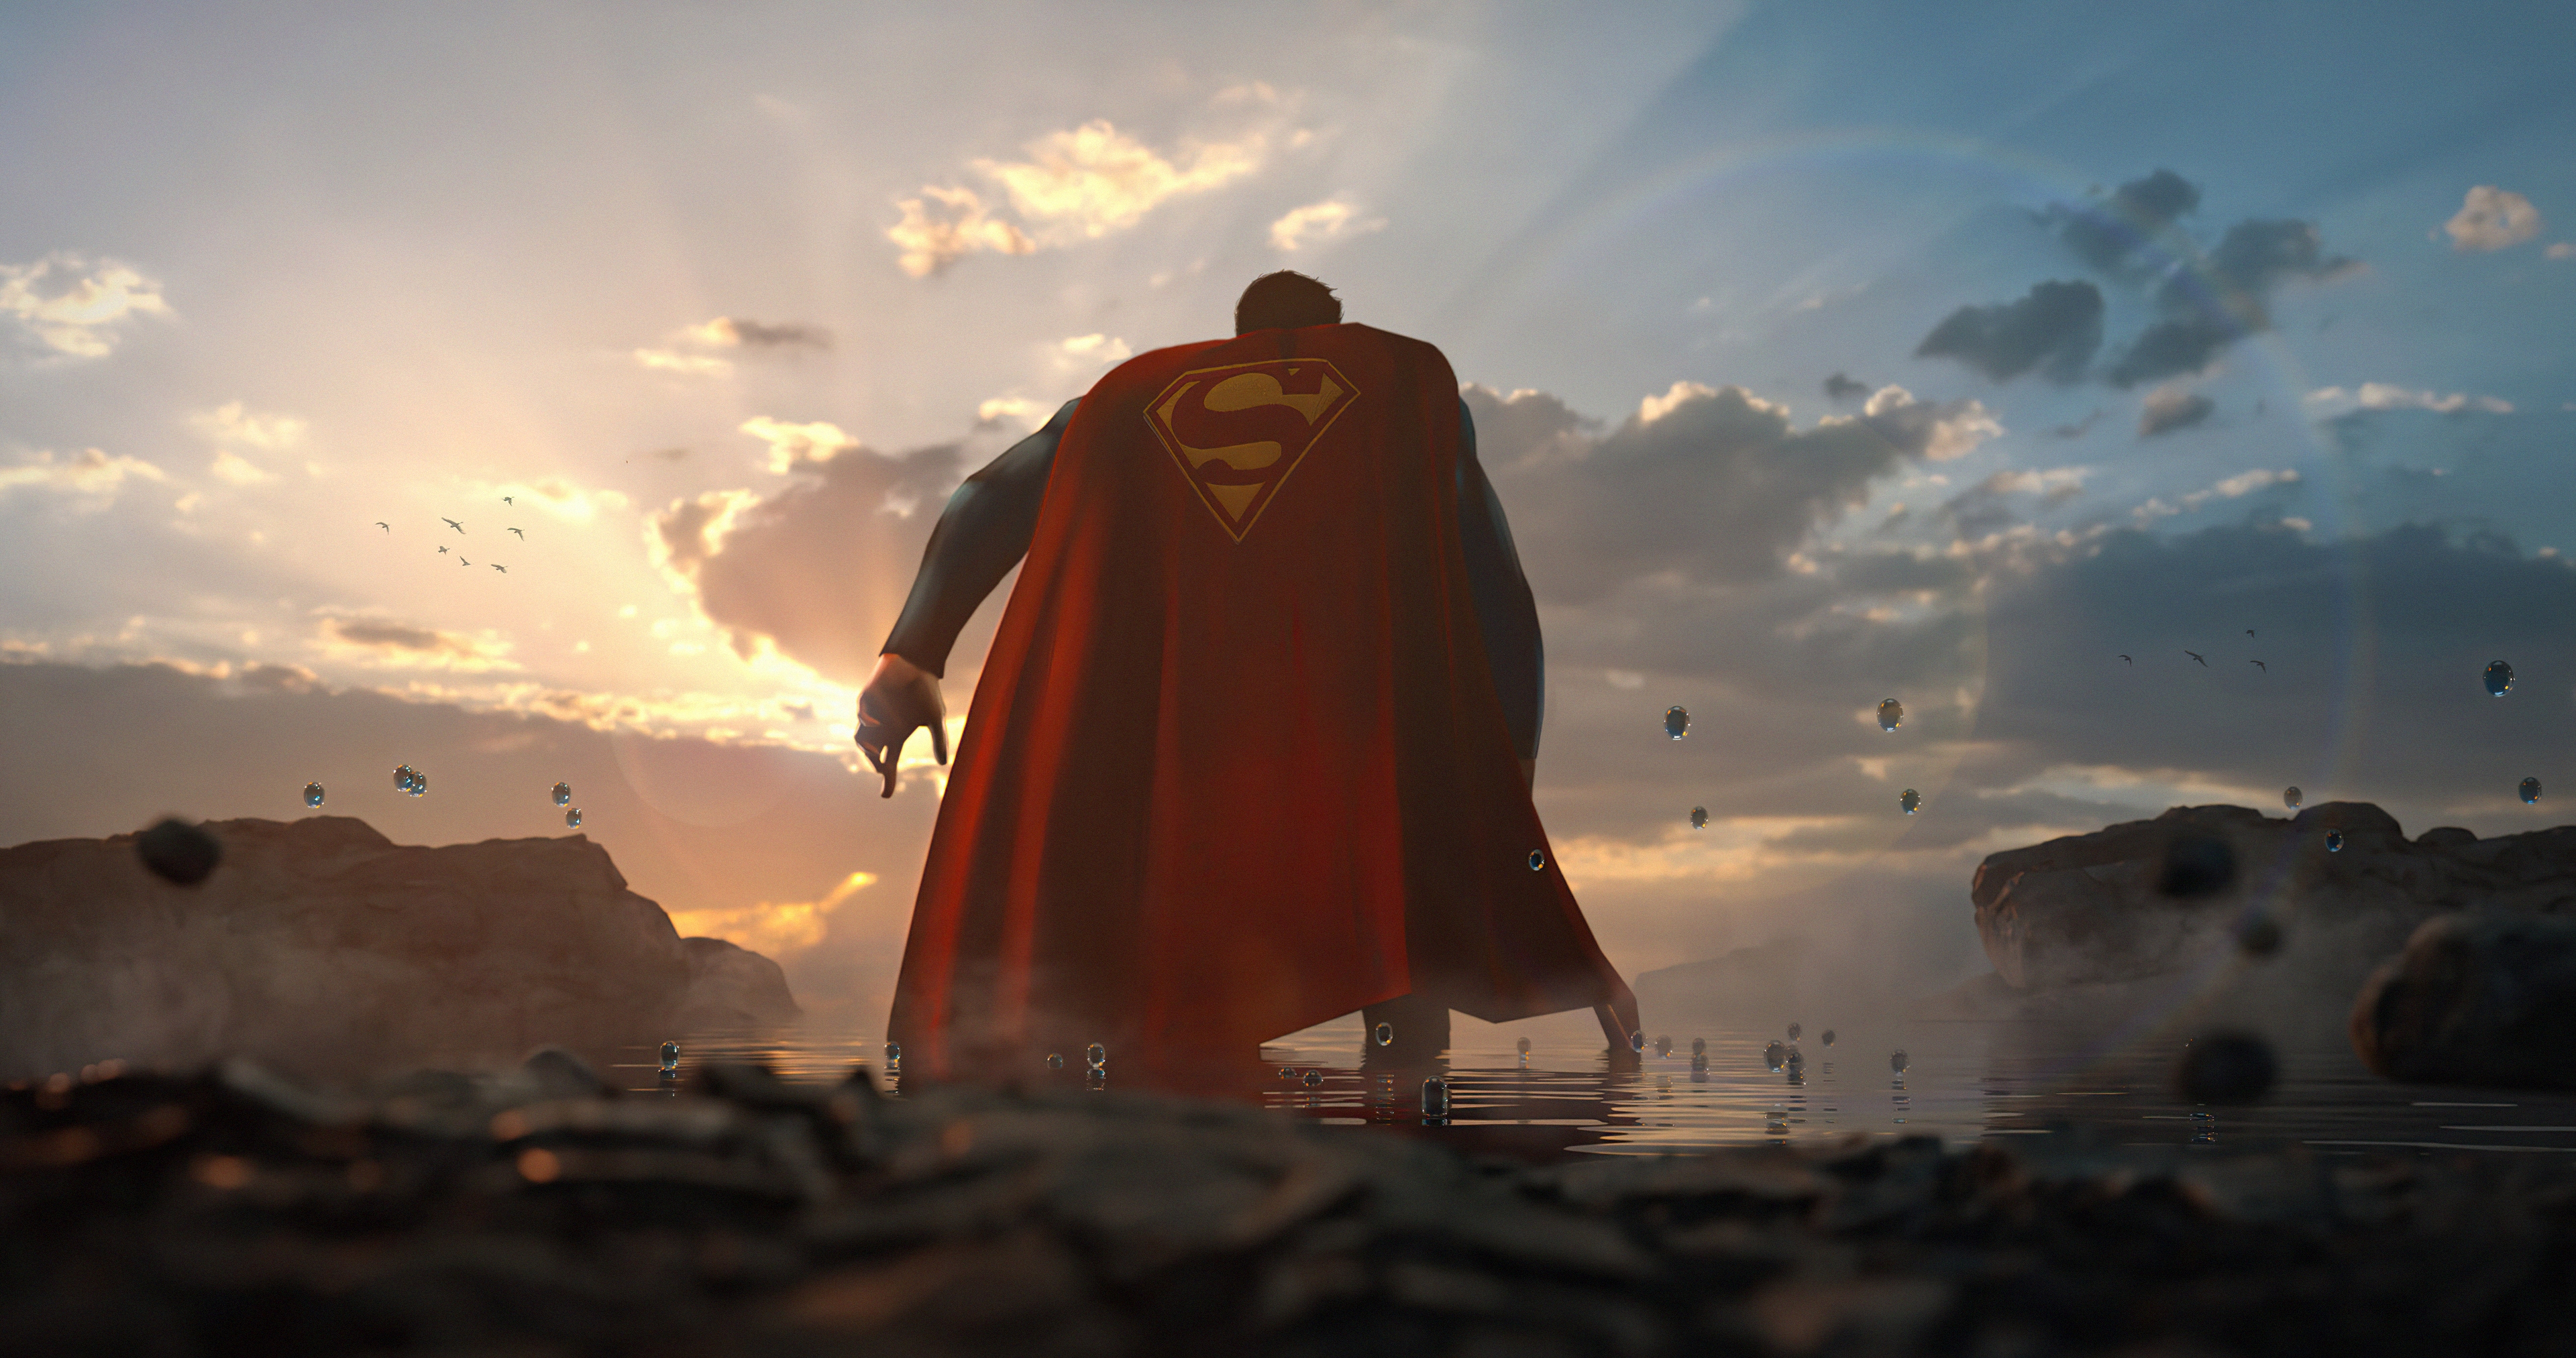 Superman 2020 4K Wallpapers